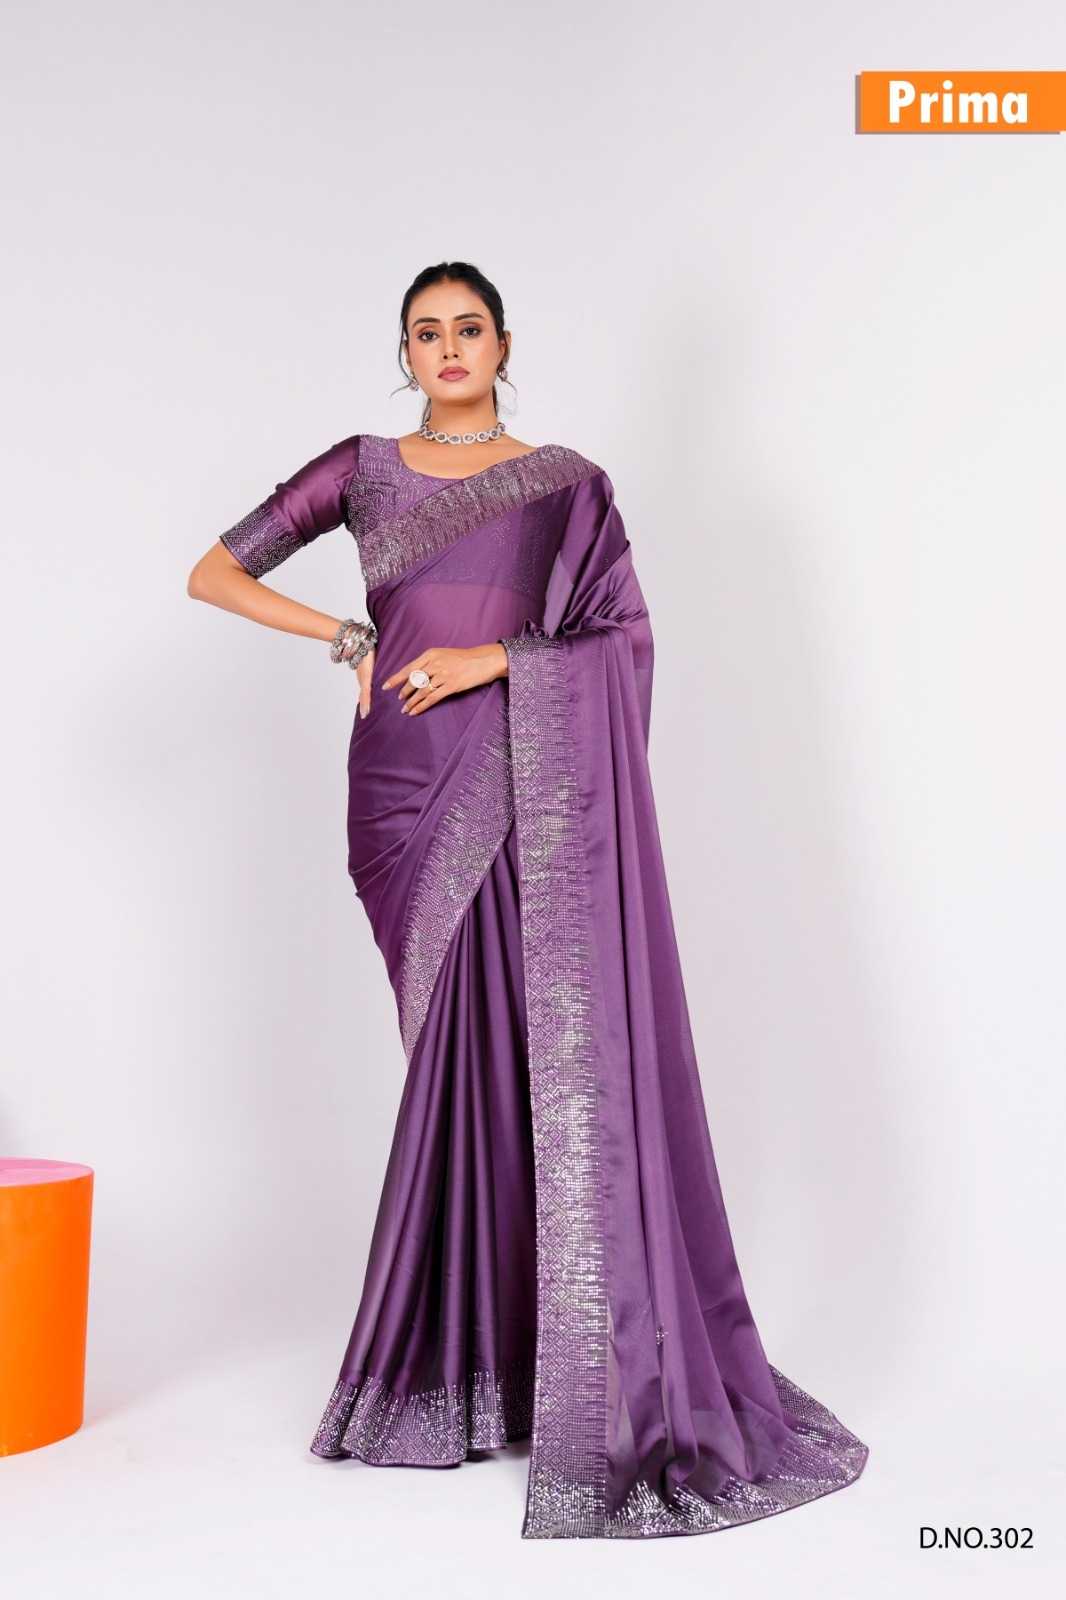 prima 301-305 new traditional wear black rangoli saree with blouse 